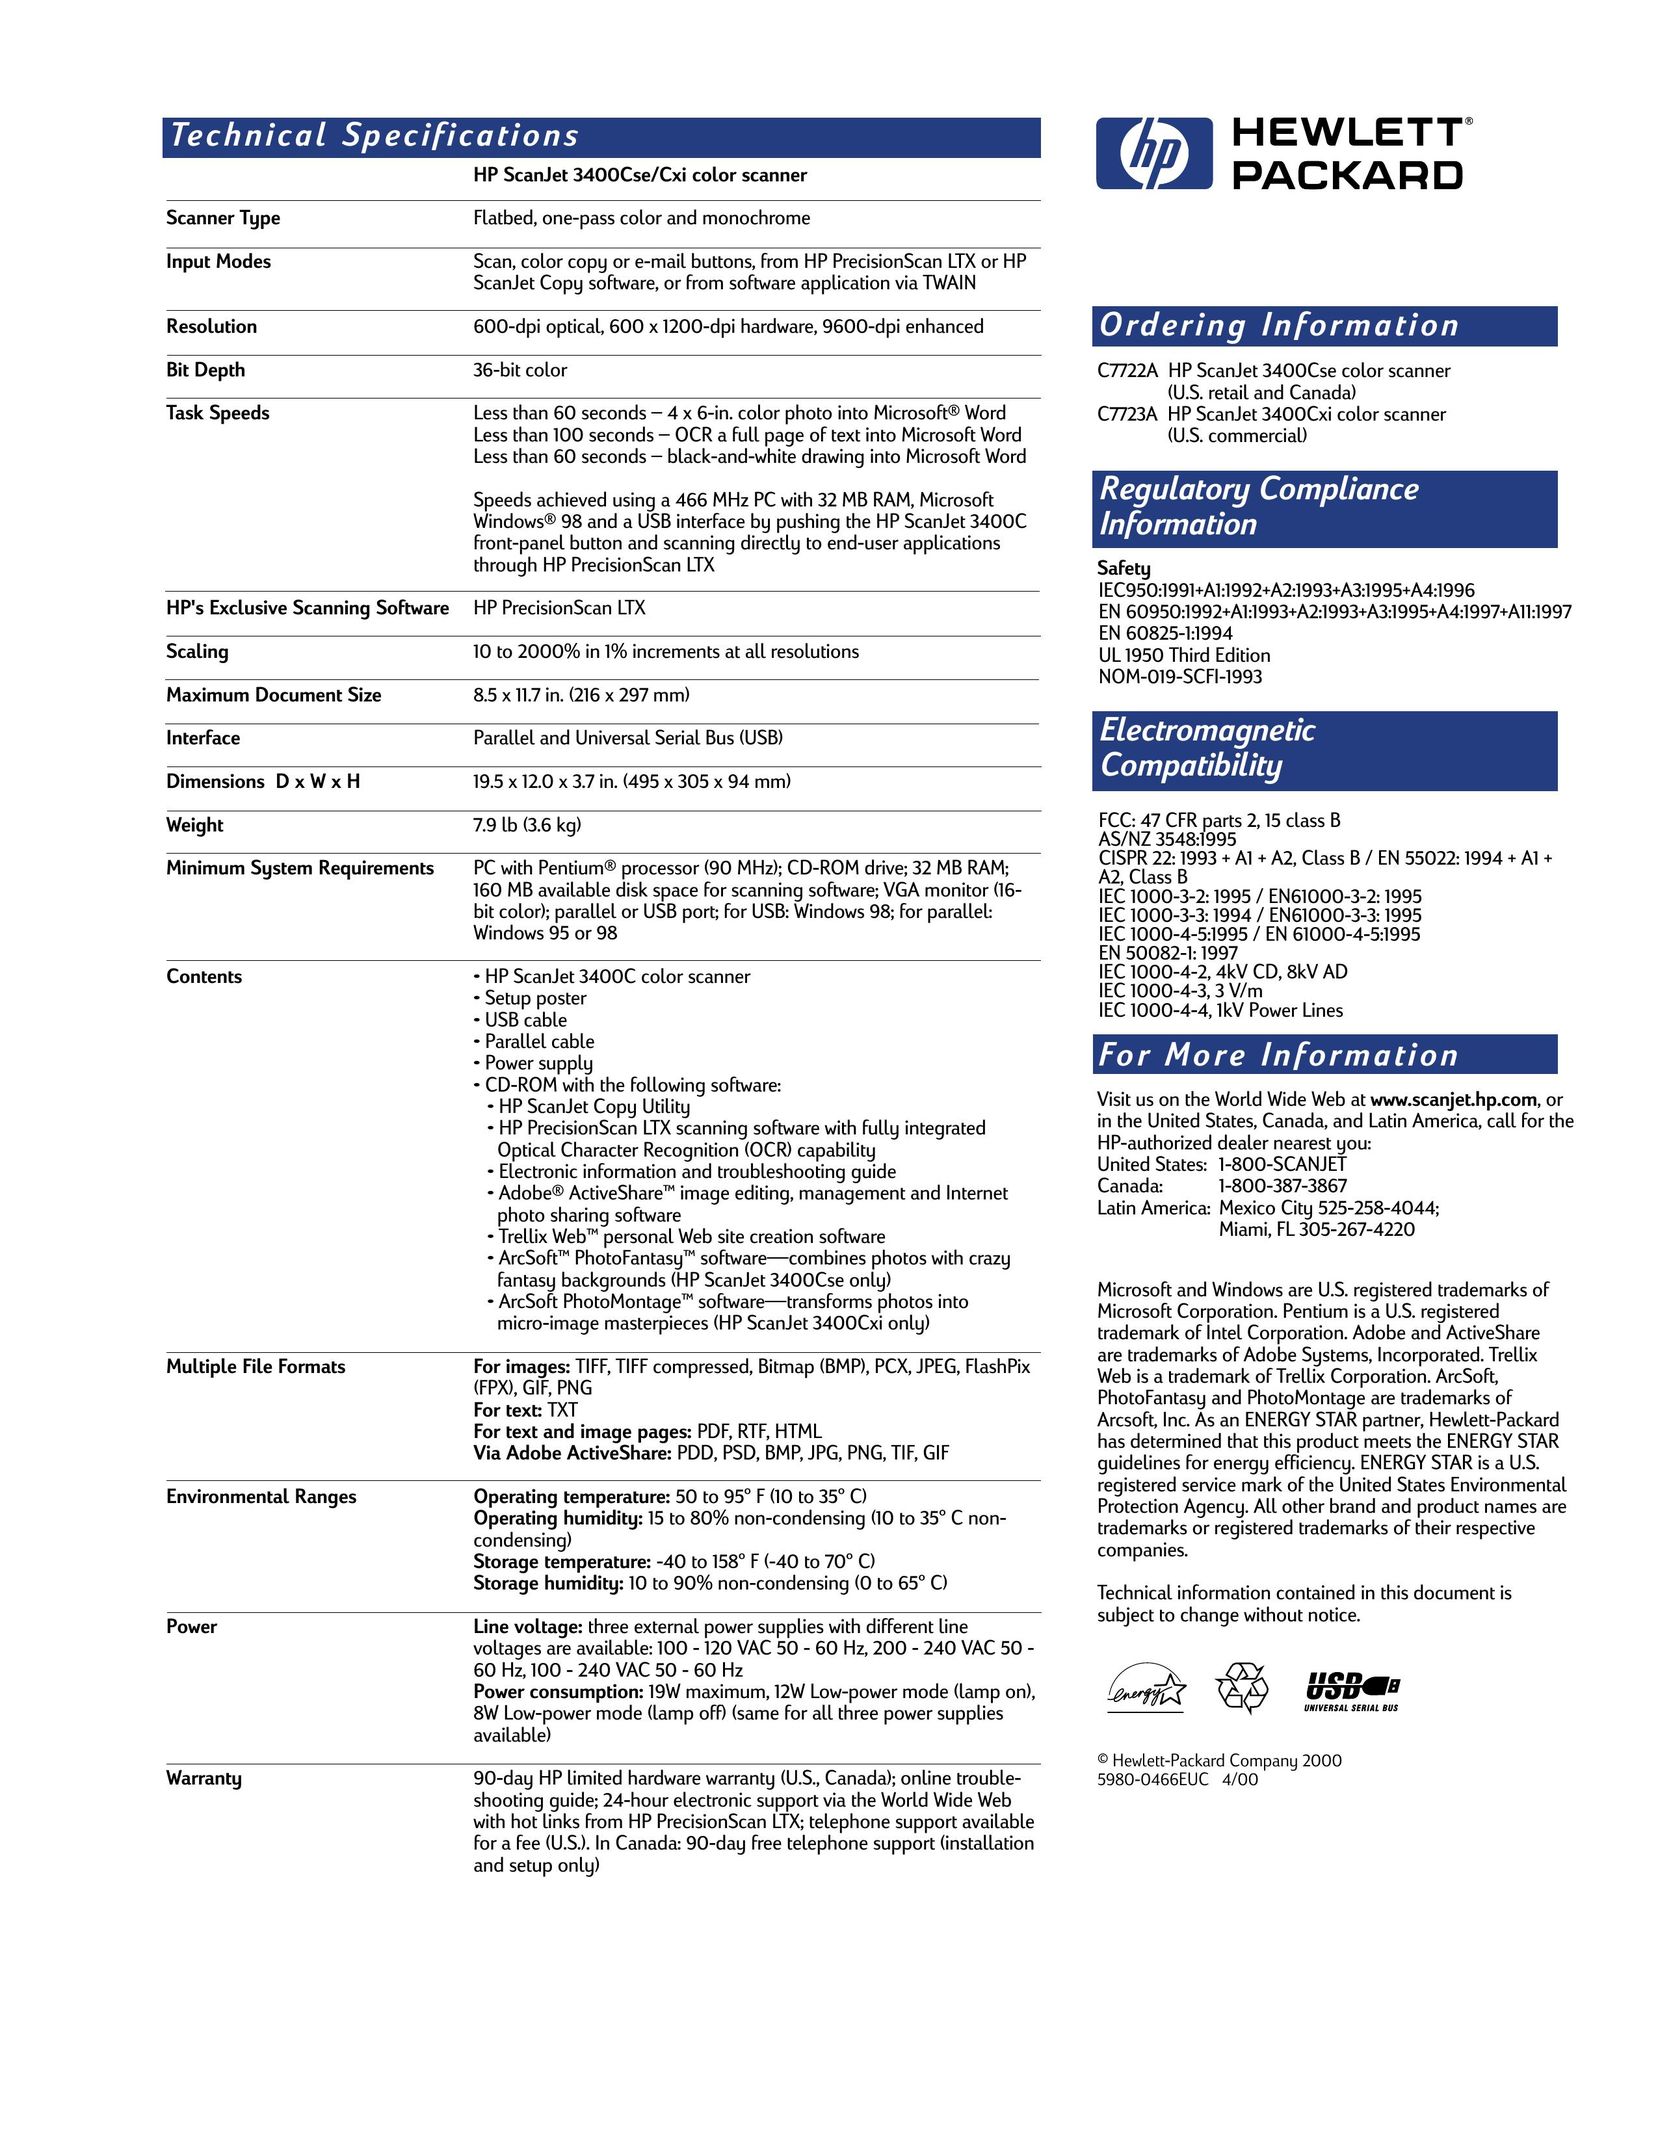 HP (Hewlett-Packard) 3400Cxi Scanner User Manual